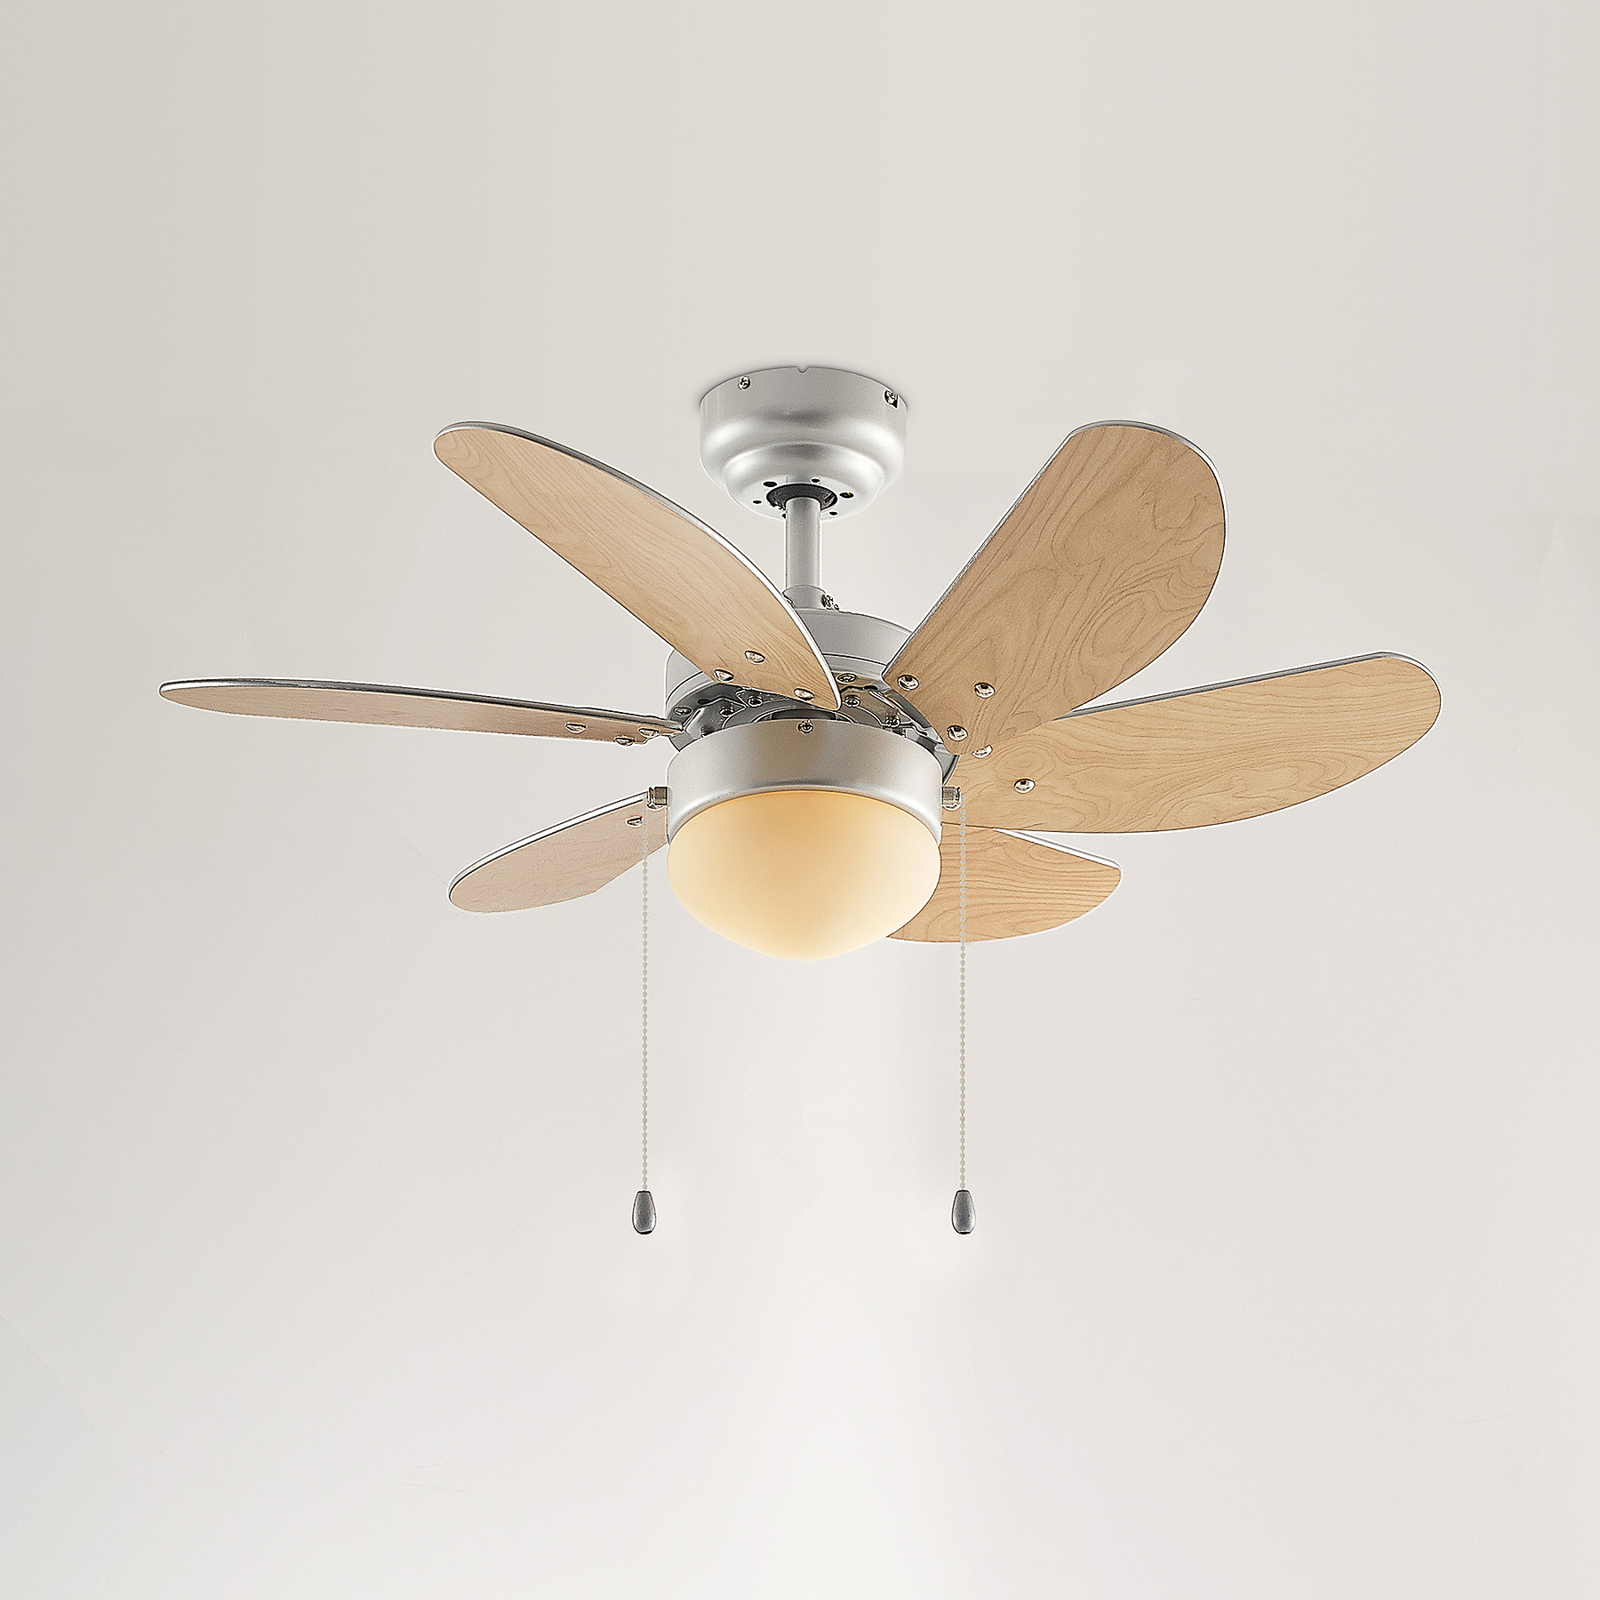 Starluna ceiling fan with light Minja silver quiet 78 cm